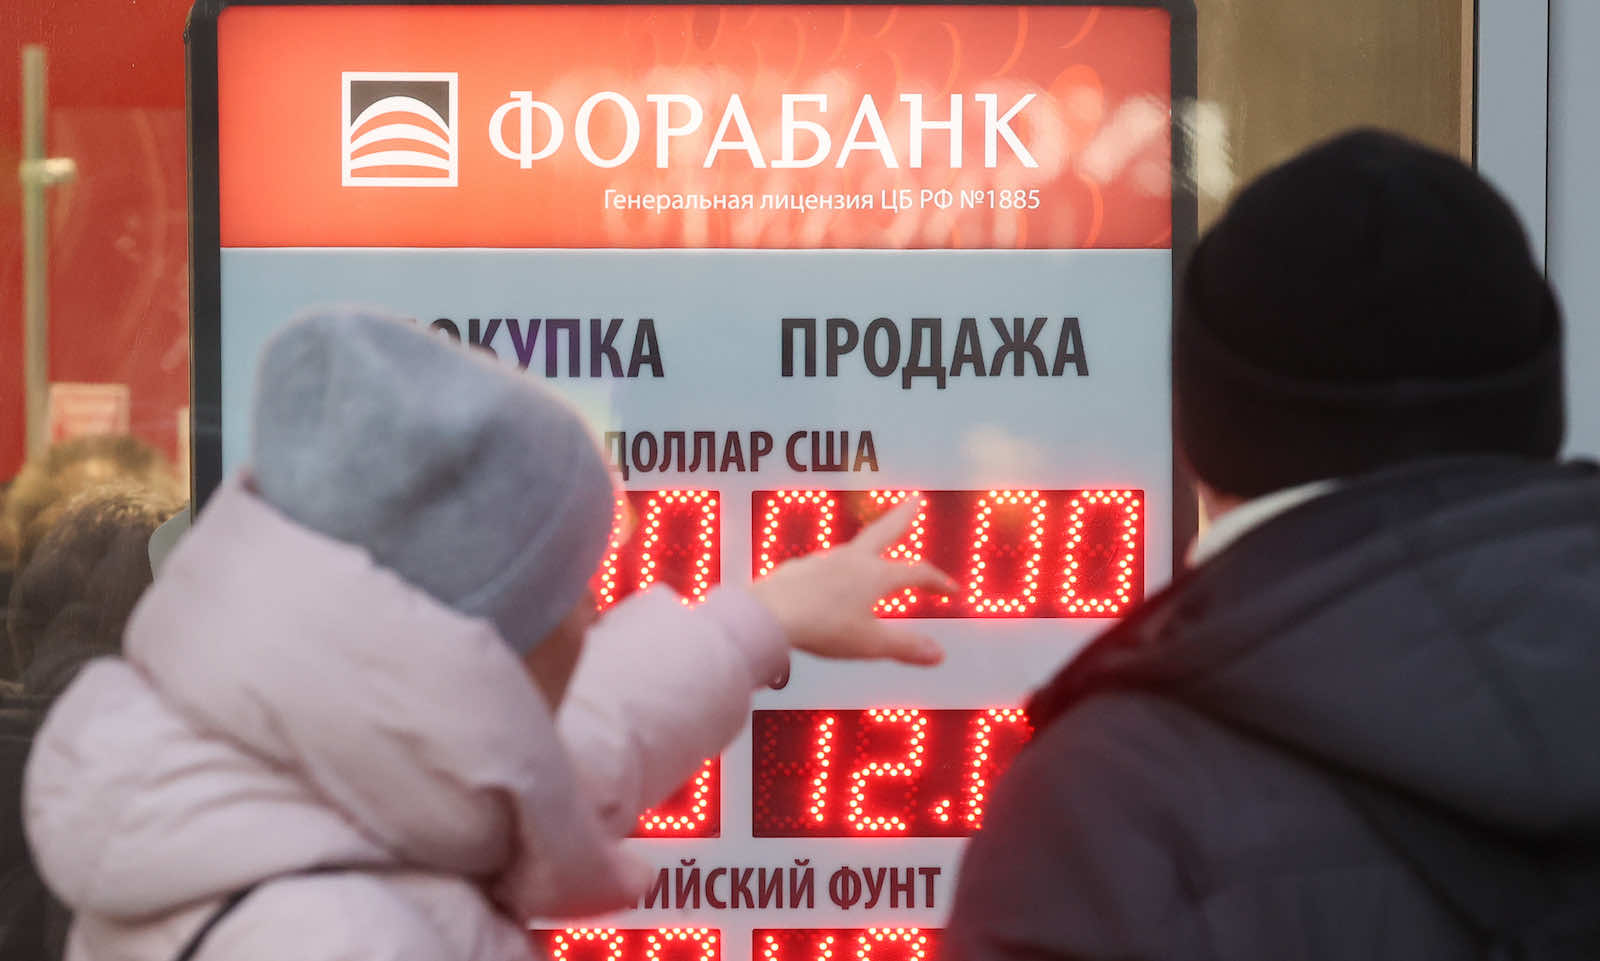 A currency exchange information board in Moscow this week (Sergei Karpukhin/TASS via Getty Images)